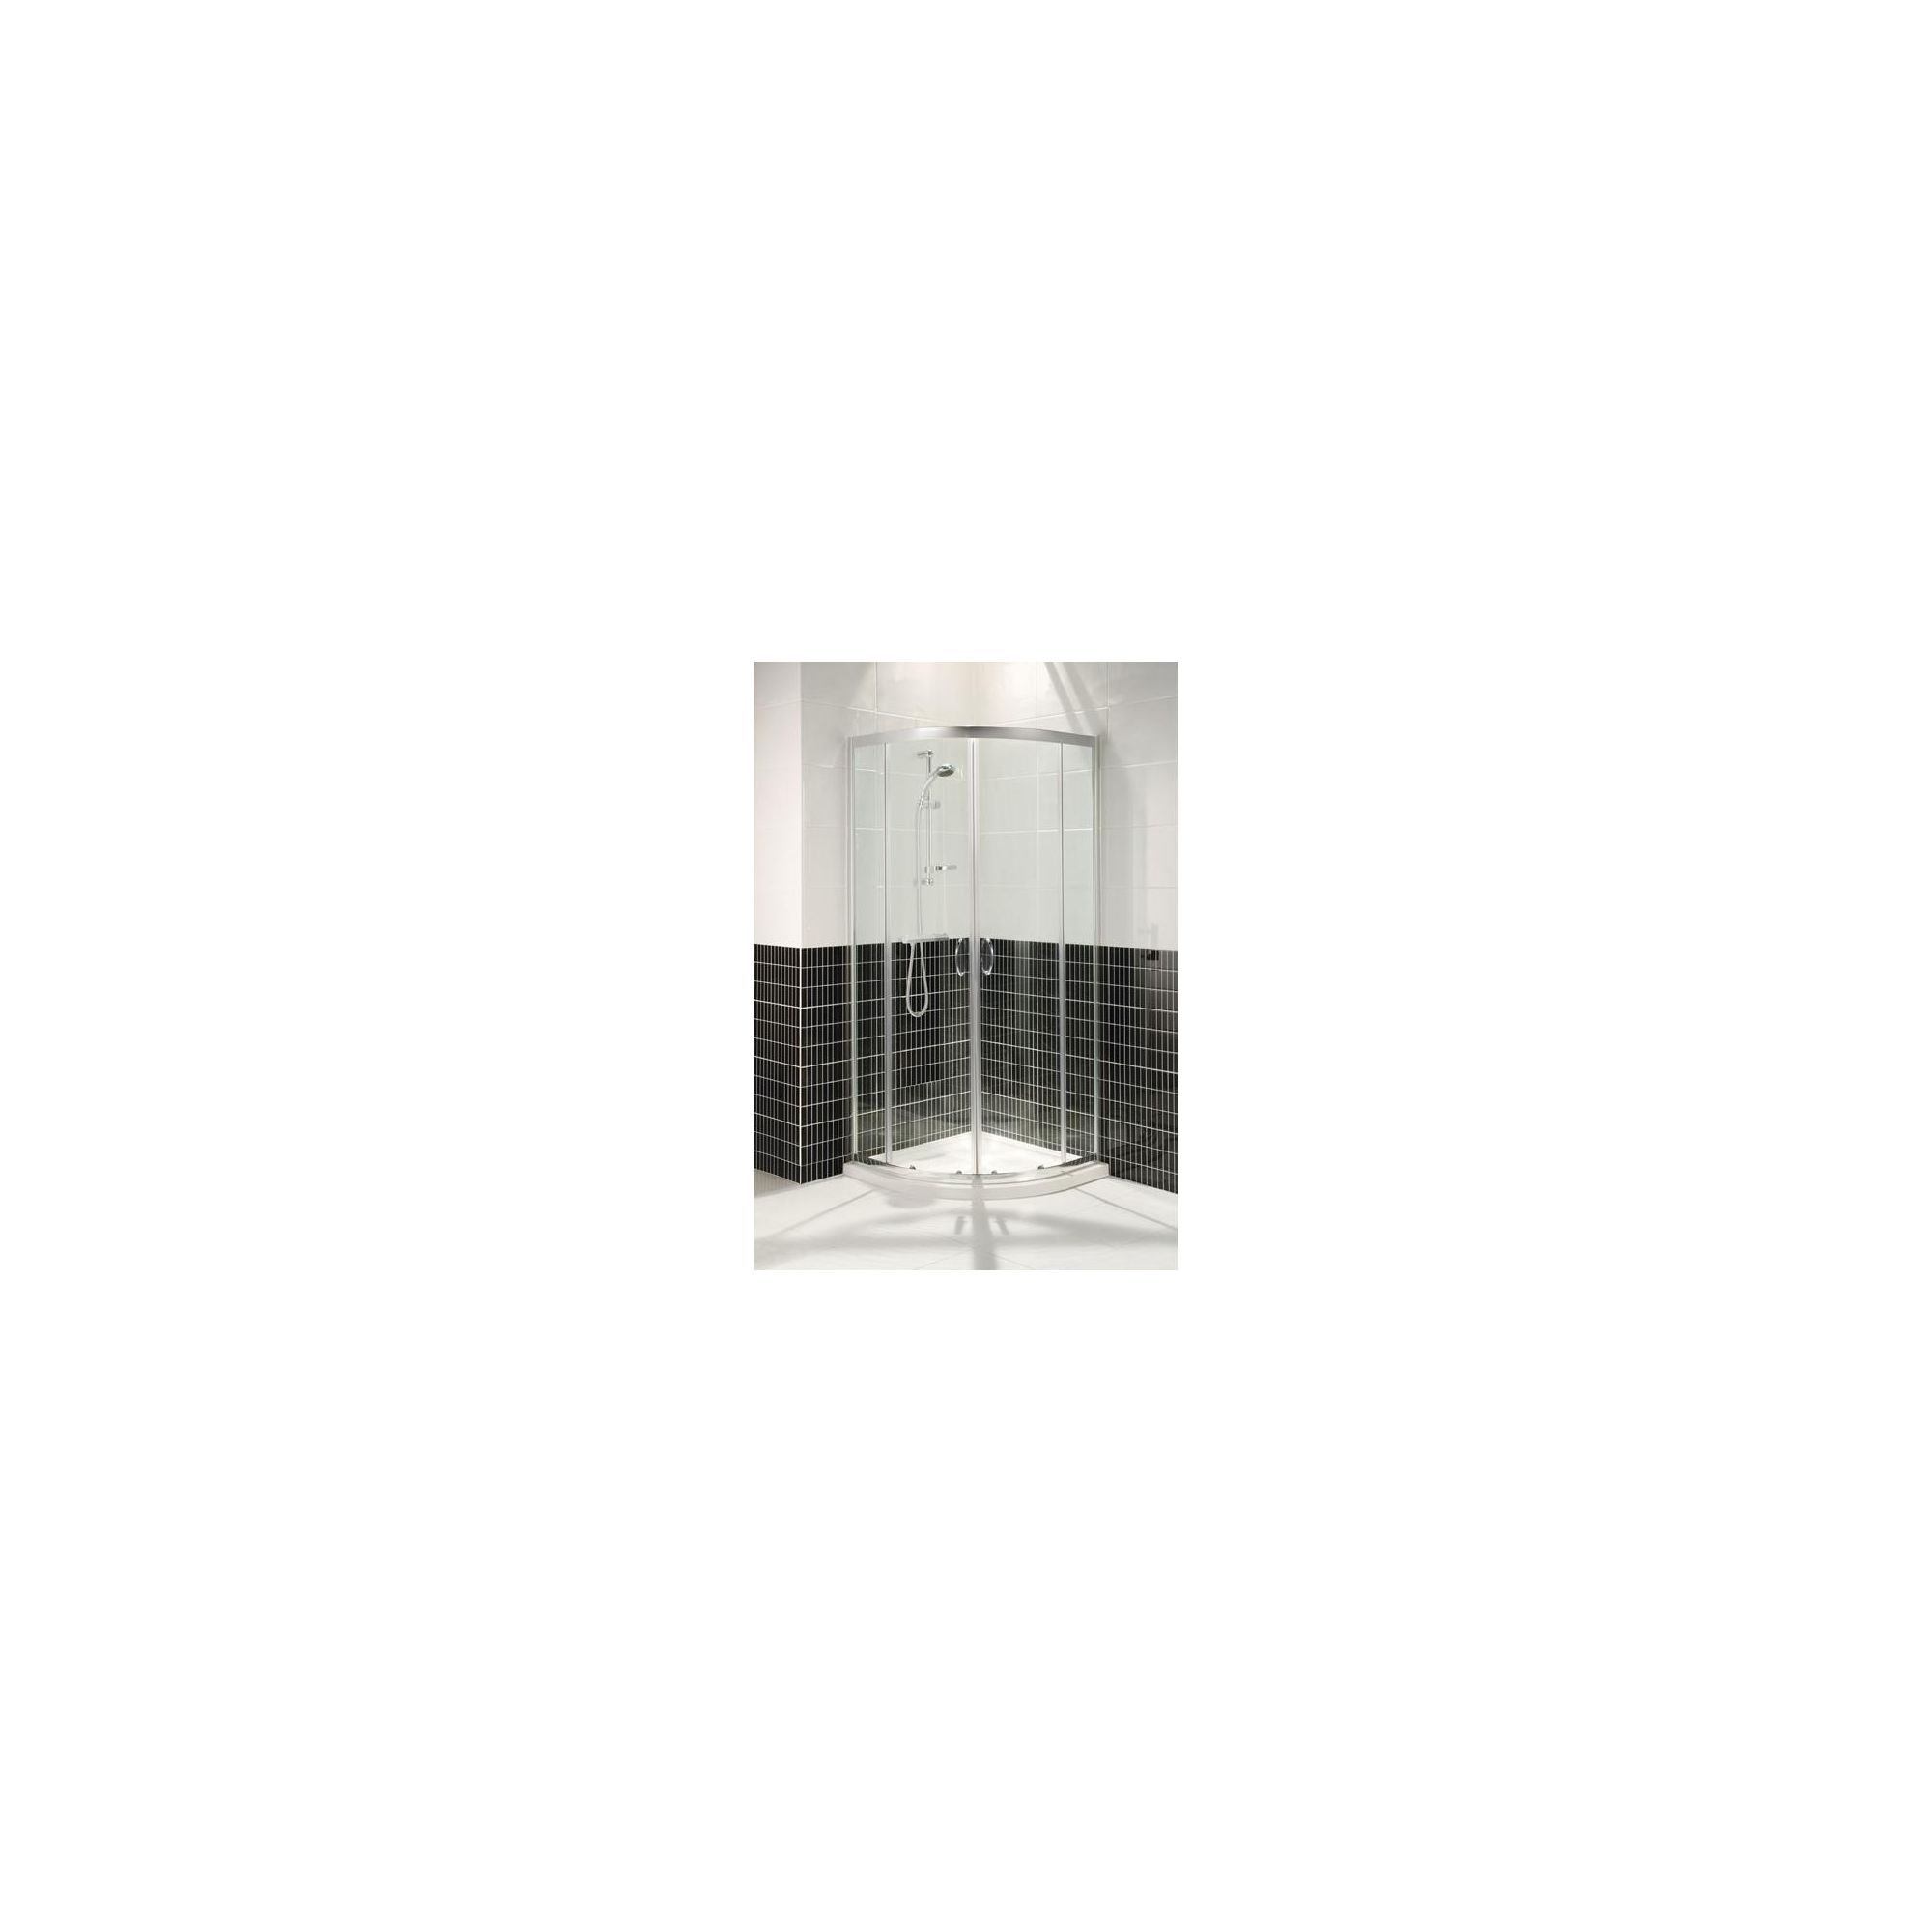 Balterley Quadrant 2 Door Shower Enclosure, 900mm x 900mm, Standard Tray, 6mm Glass at Tesco Direct